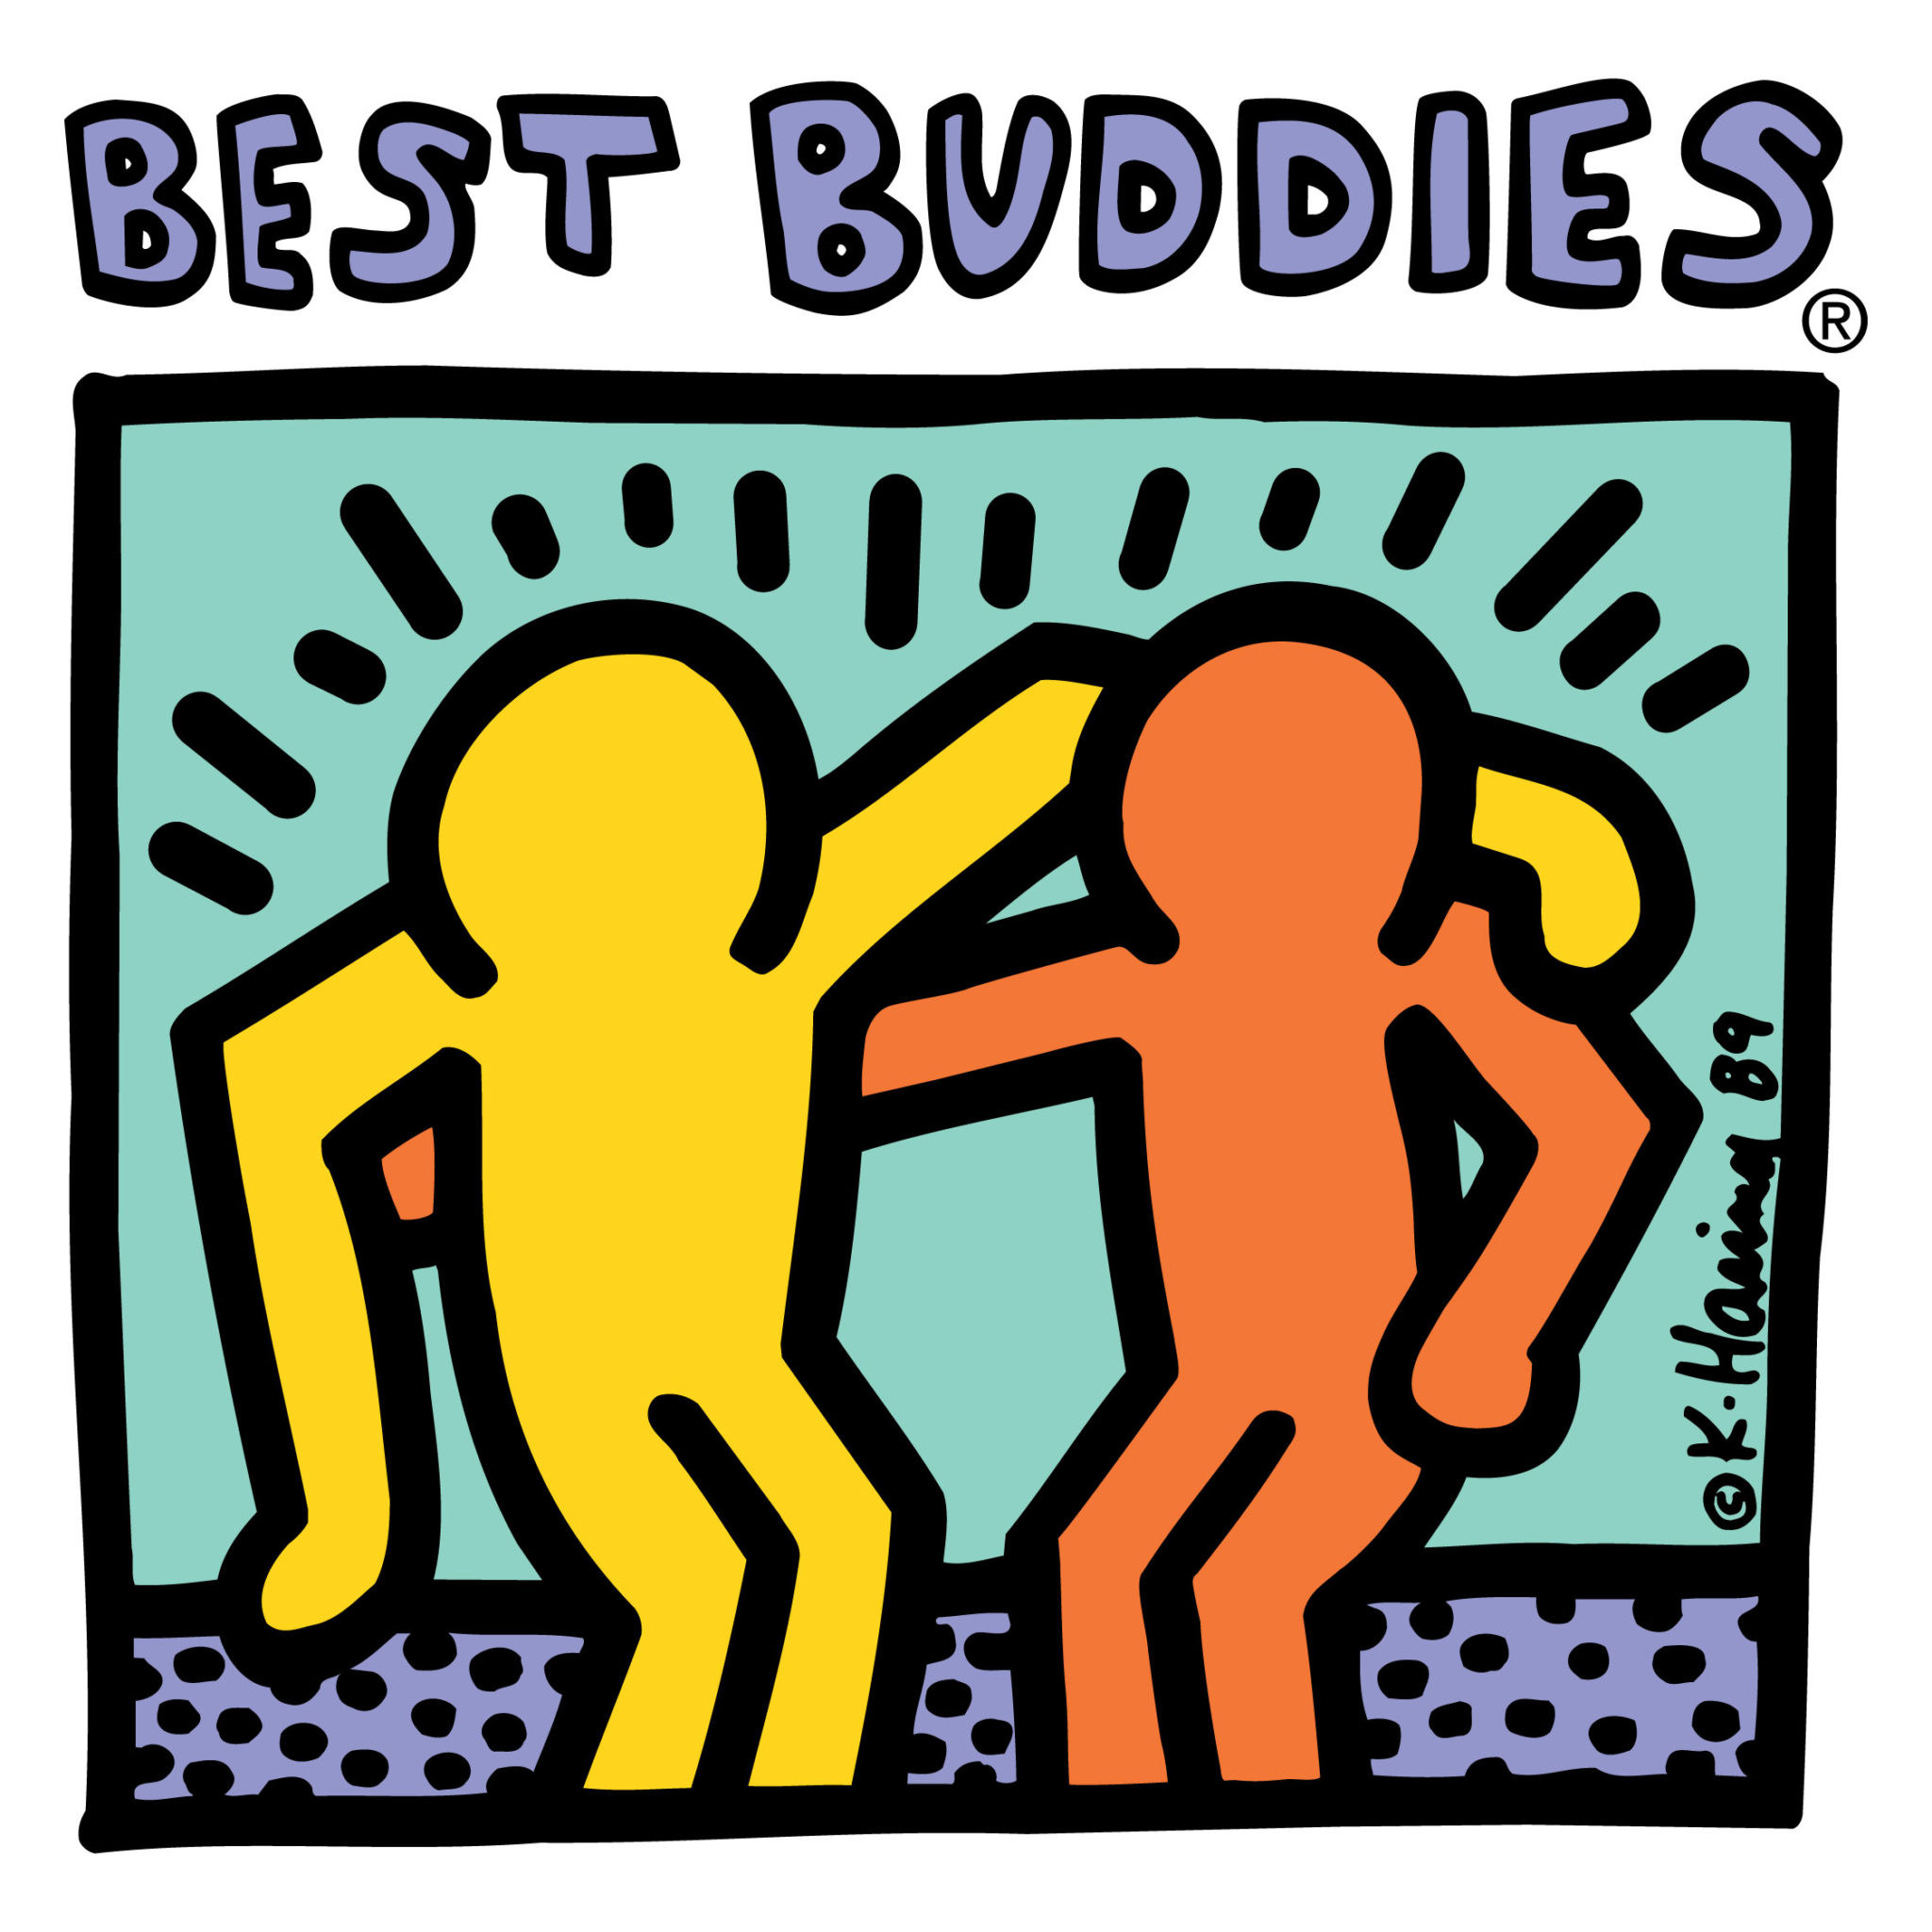 best buddies logo font